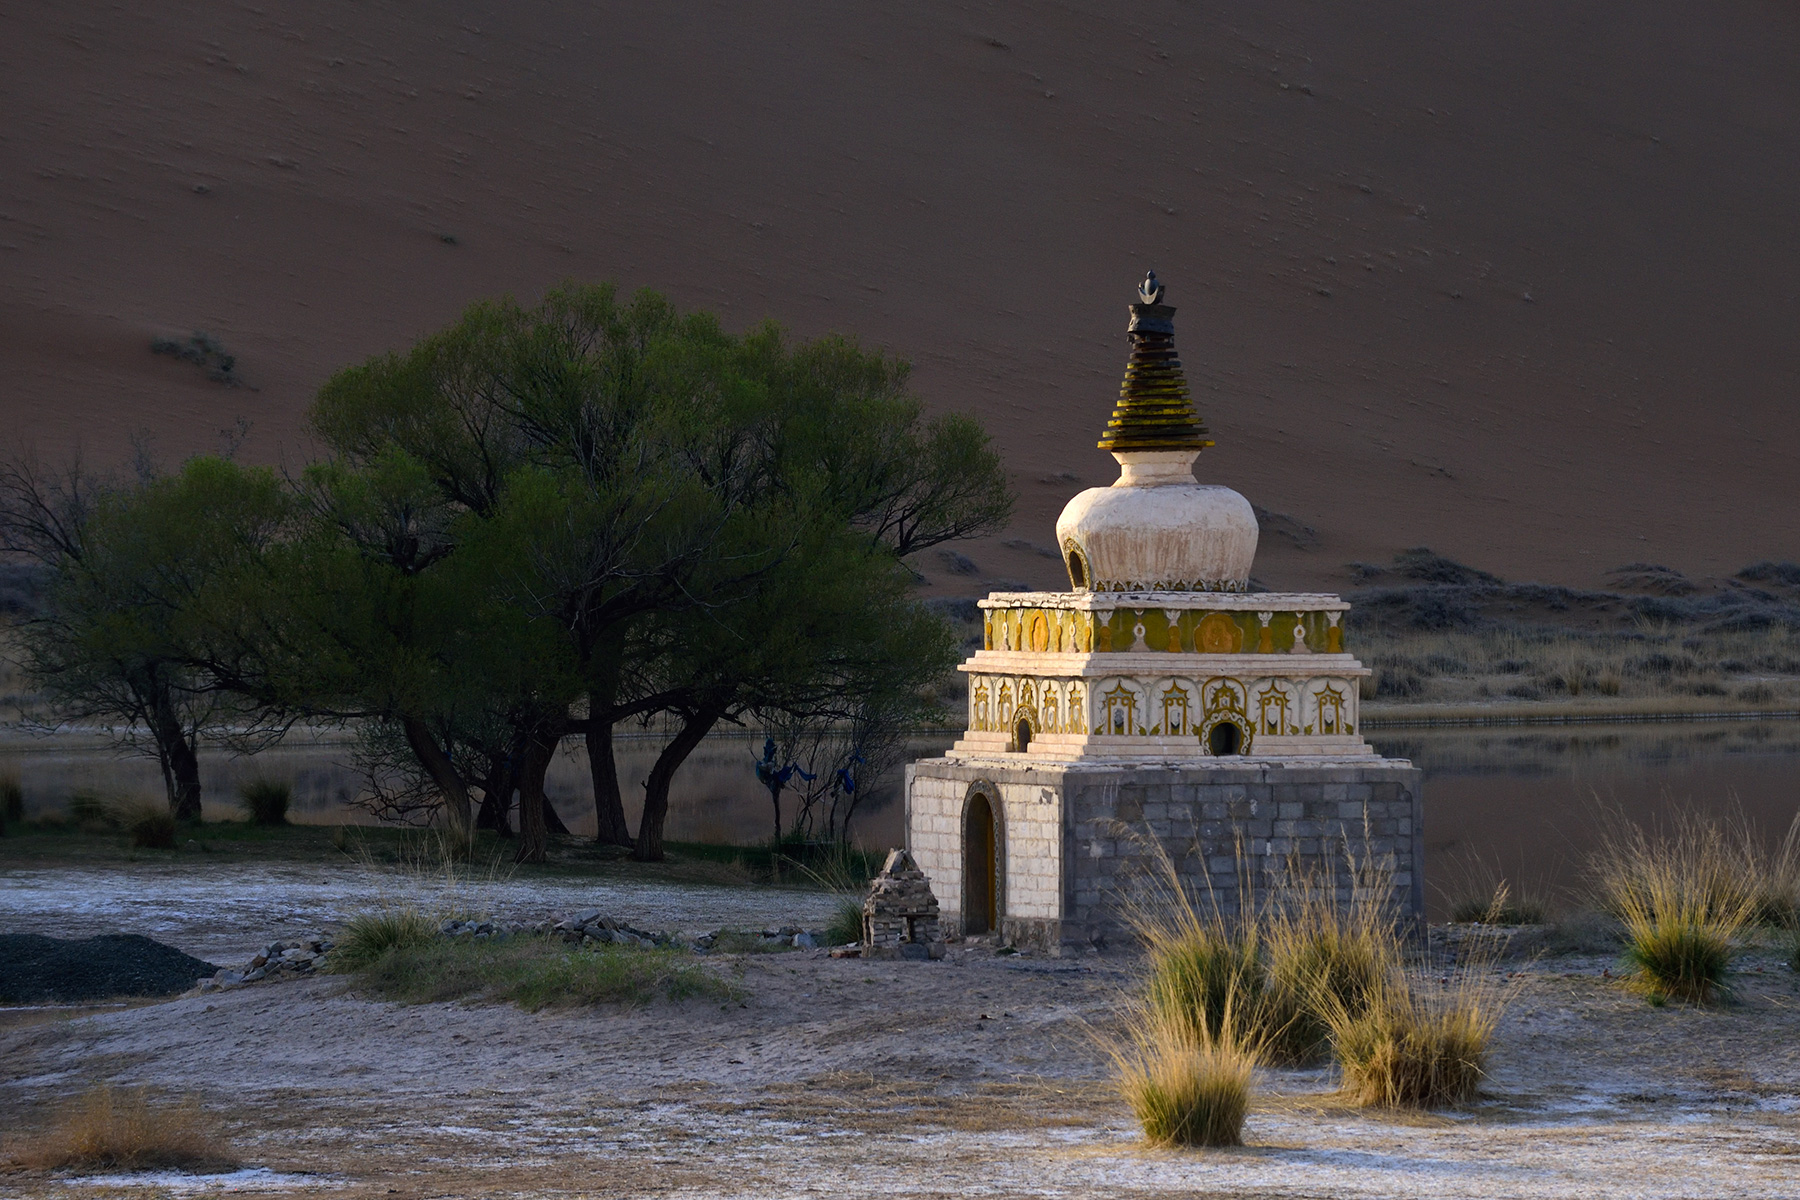 Désert du Badain Jaran (Chine, Mongolie Intérieure) - le stupa du temple de Badain Jaran.